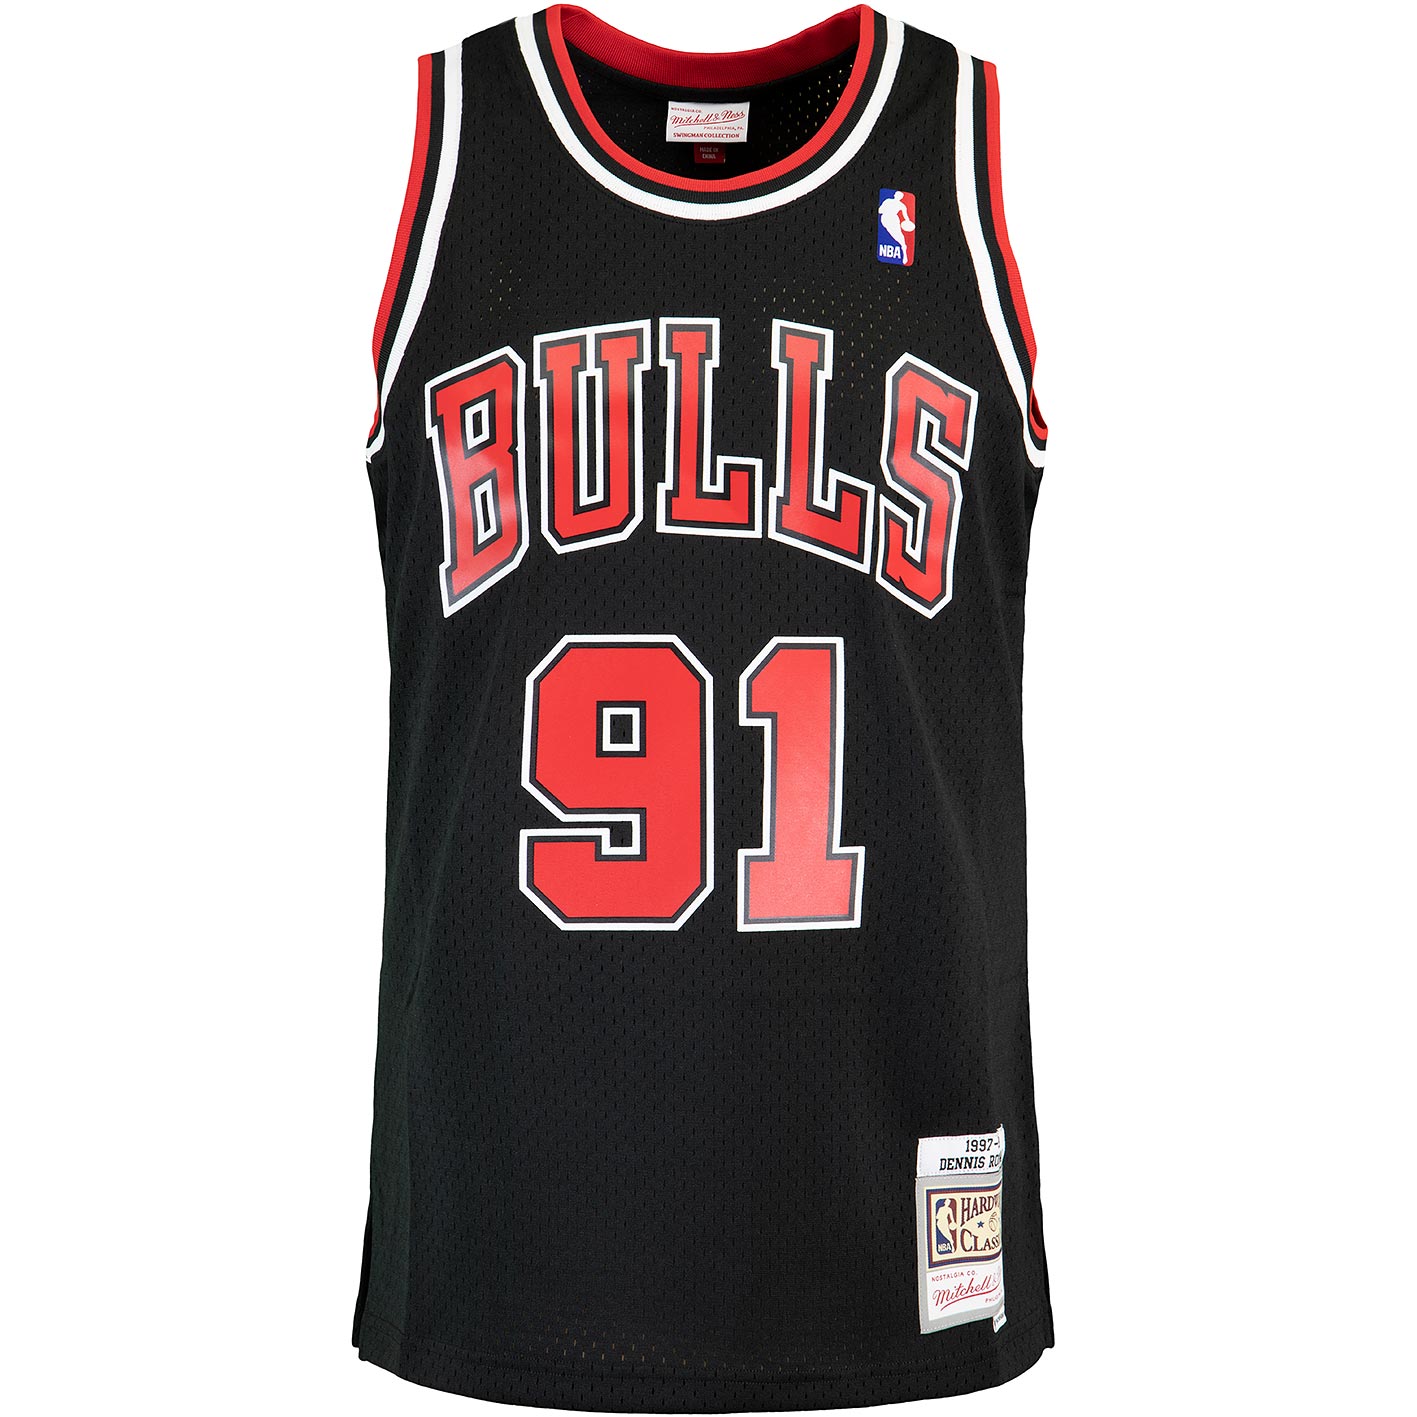 Retro 1998 Finals Dennis Rodman #91 Chicago Bulls Basketball Trikot Genäht Rot 